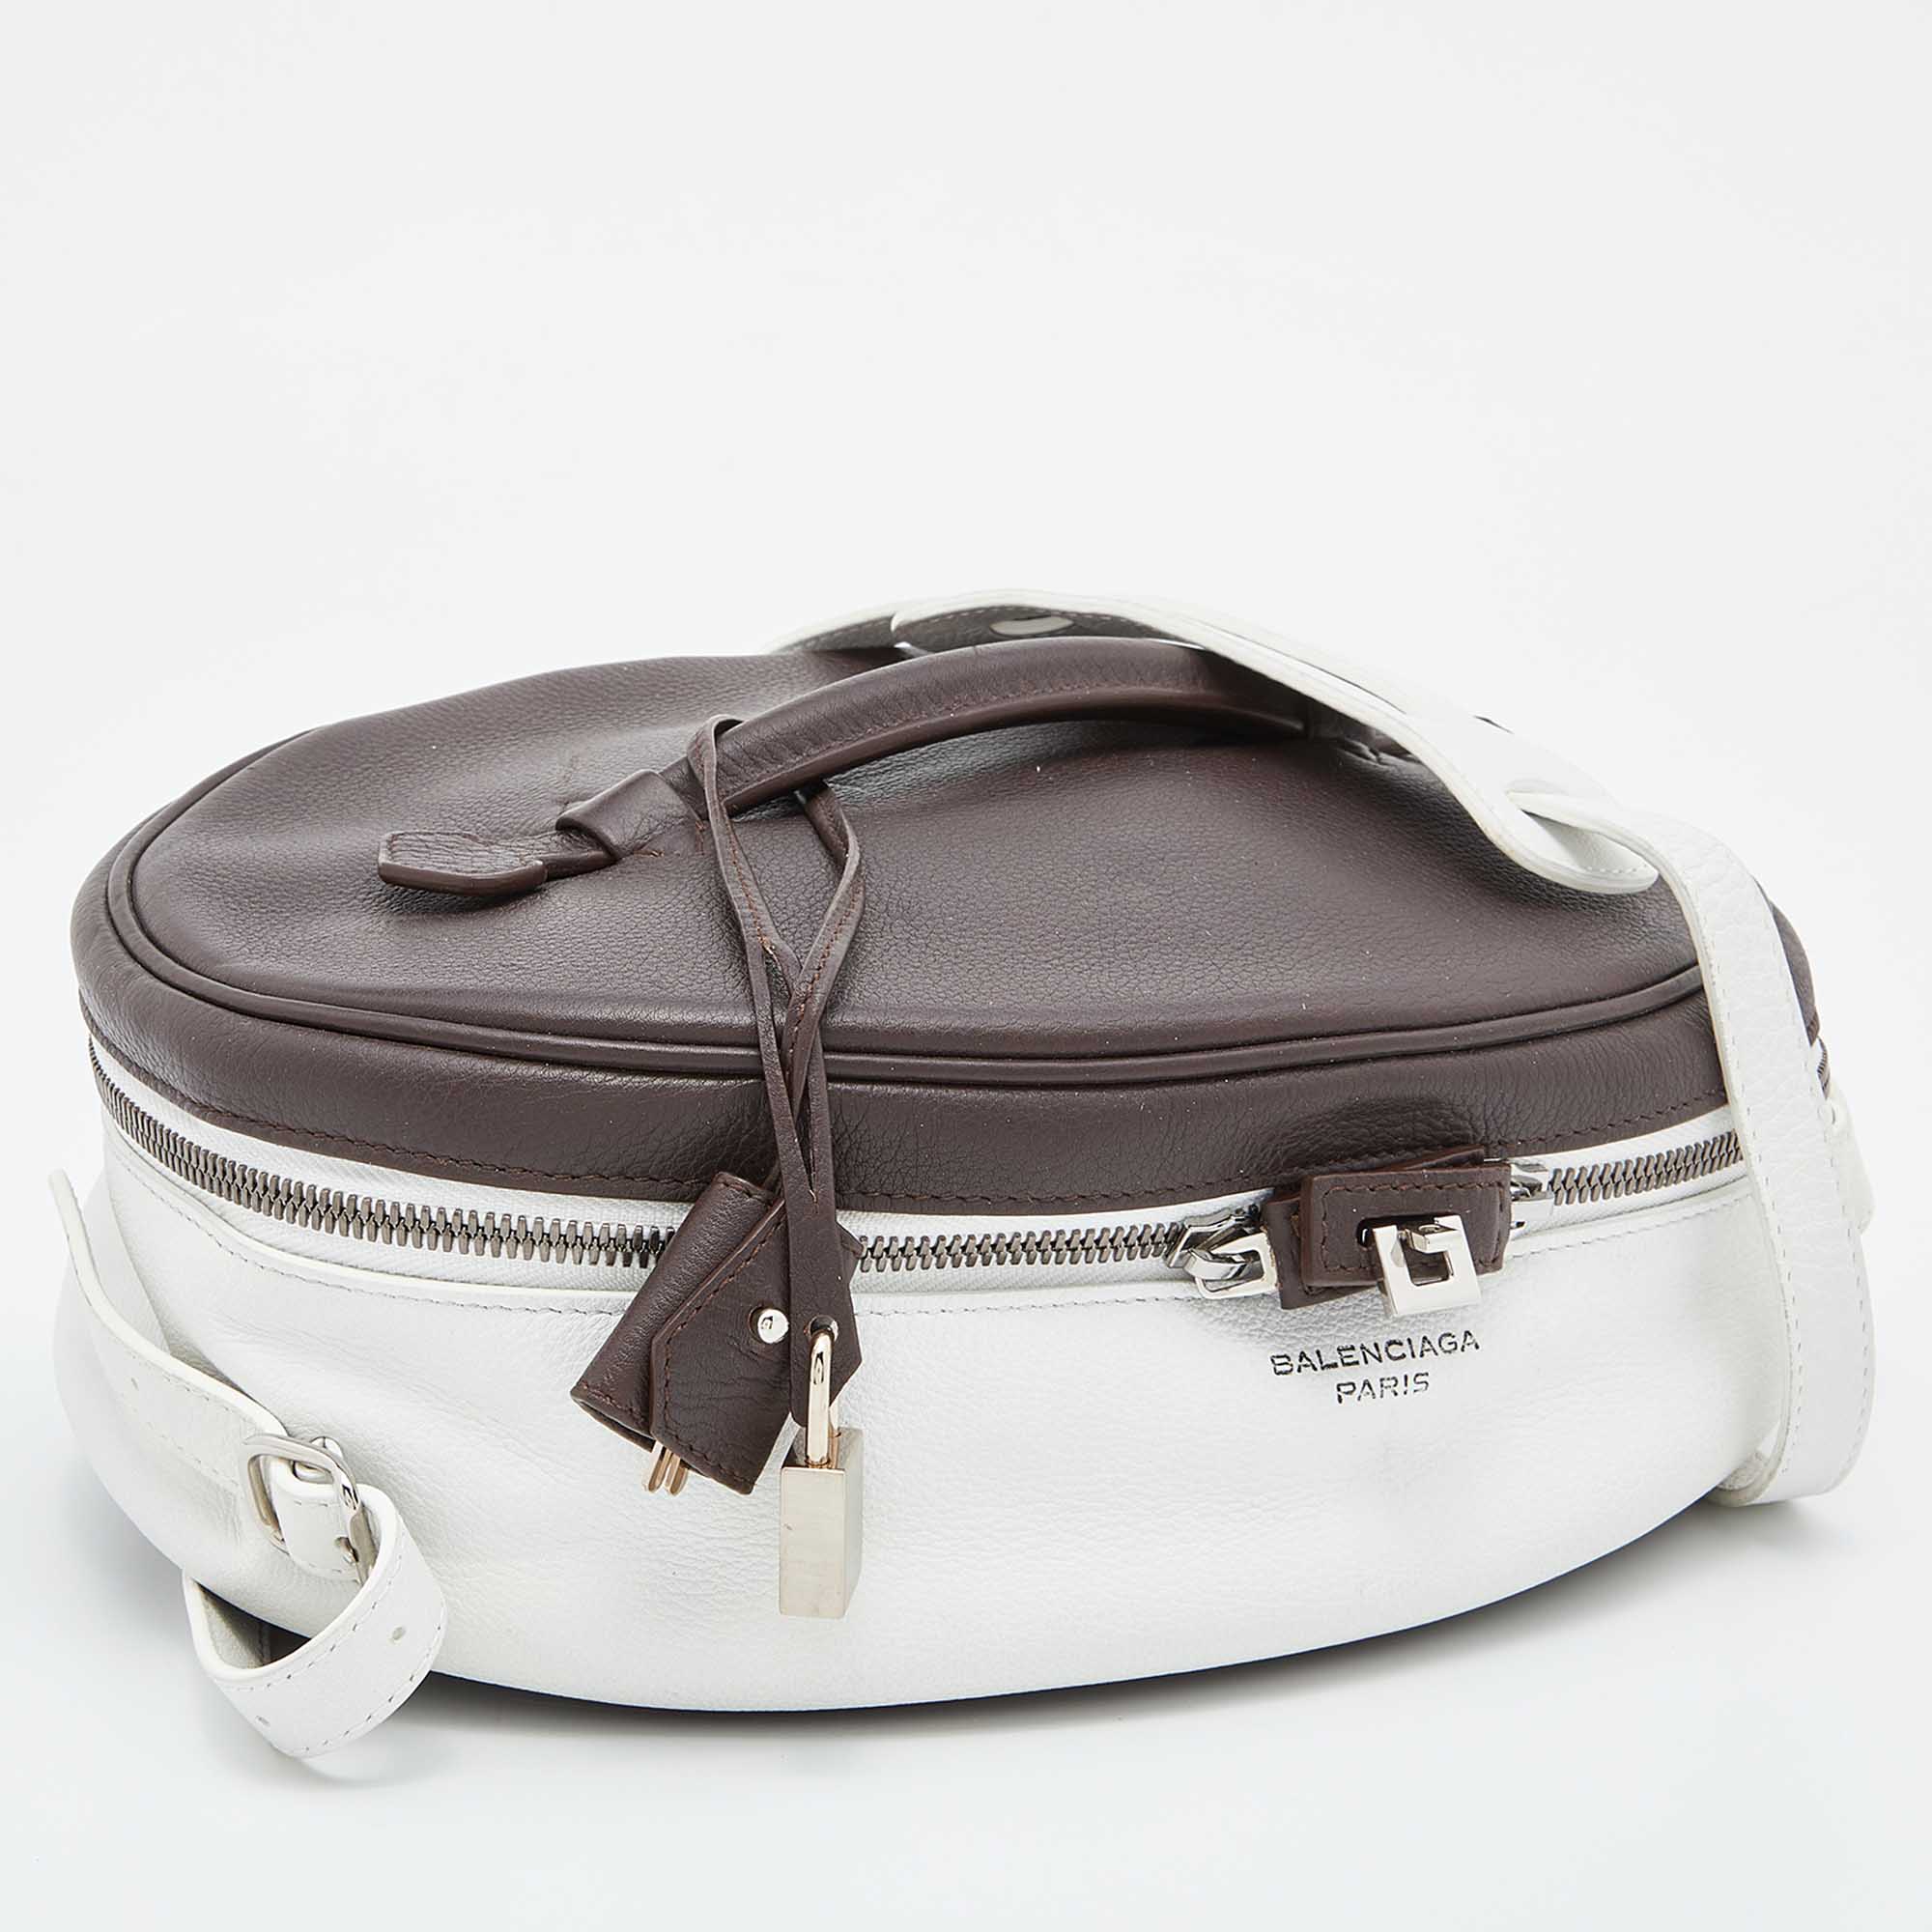 Balenciaga Brown/White Leather Top Handle Bag